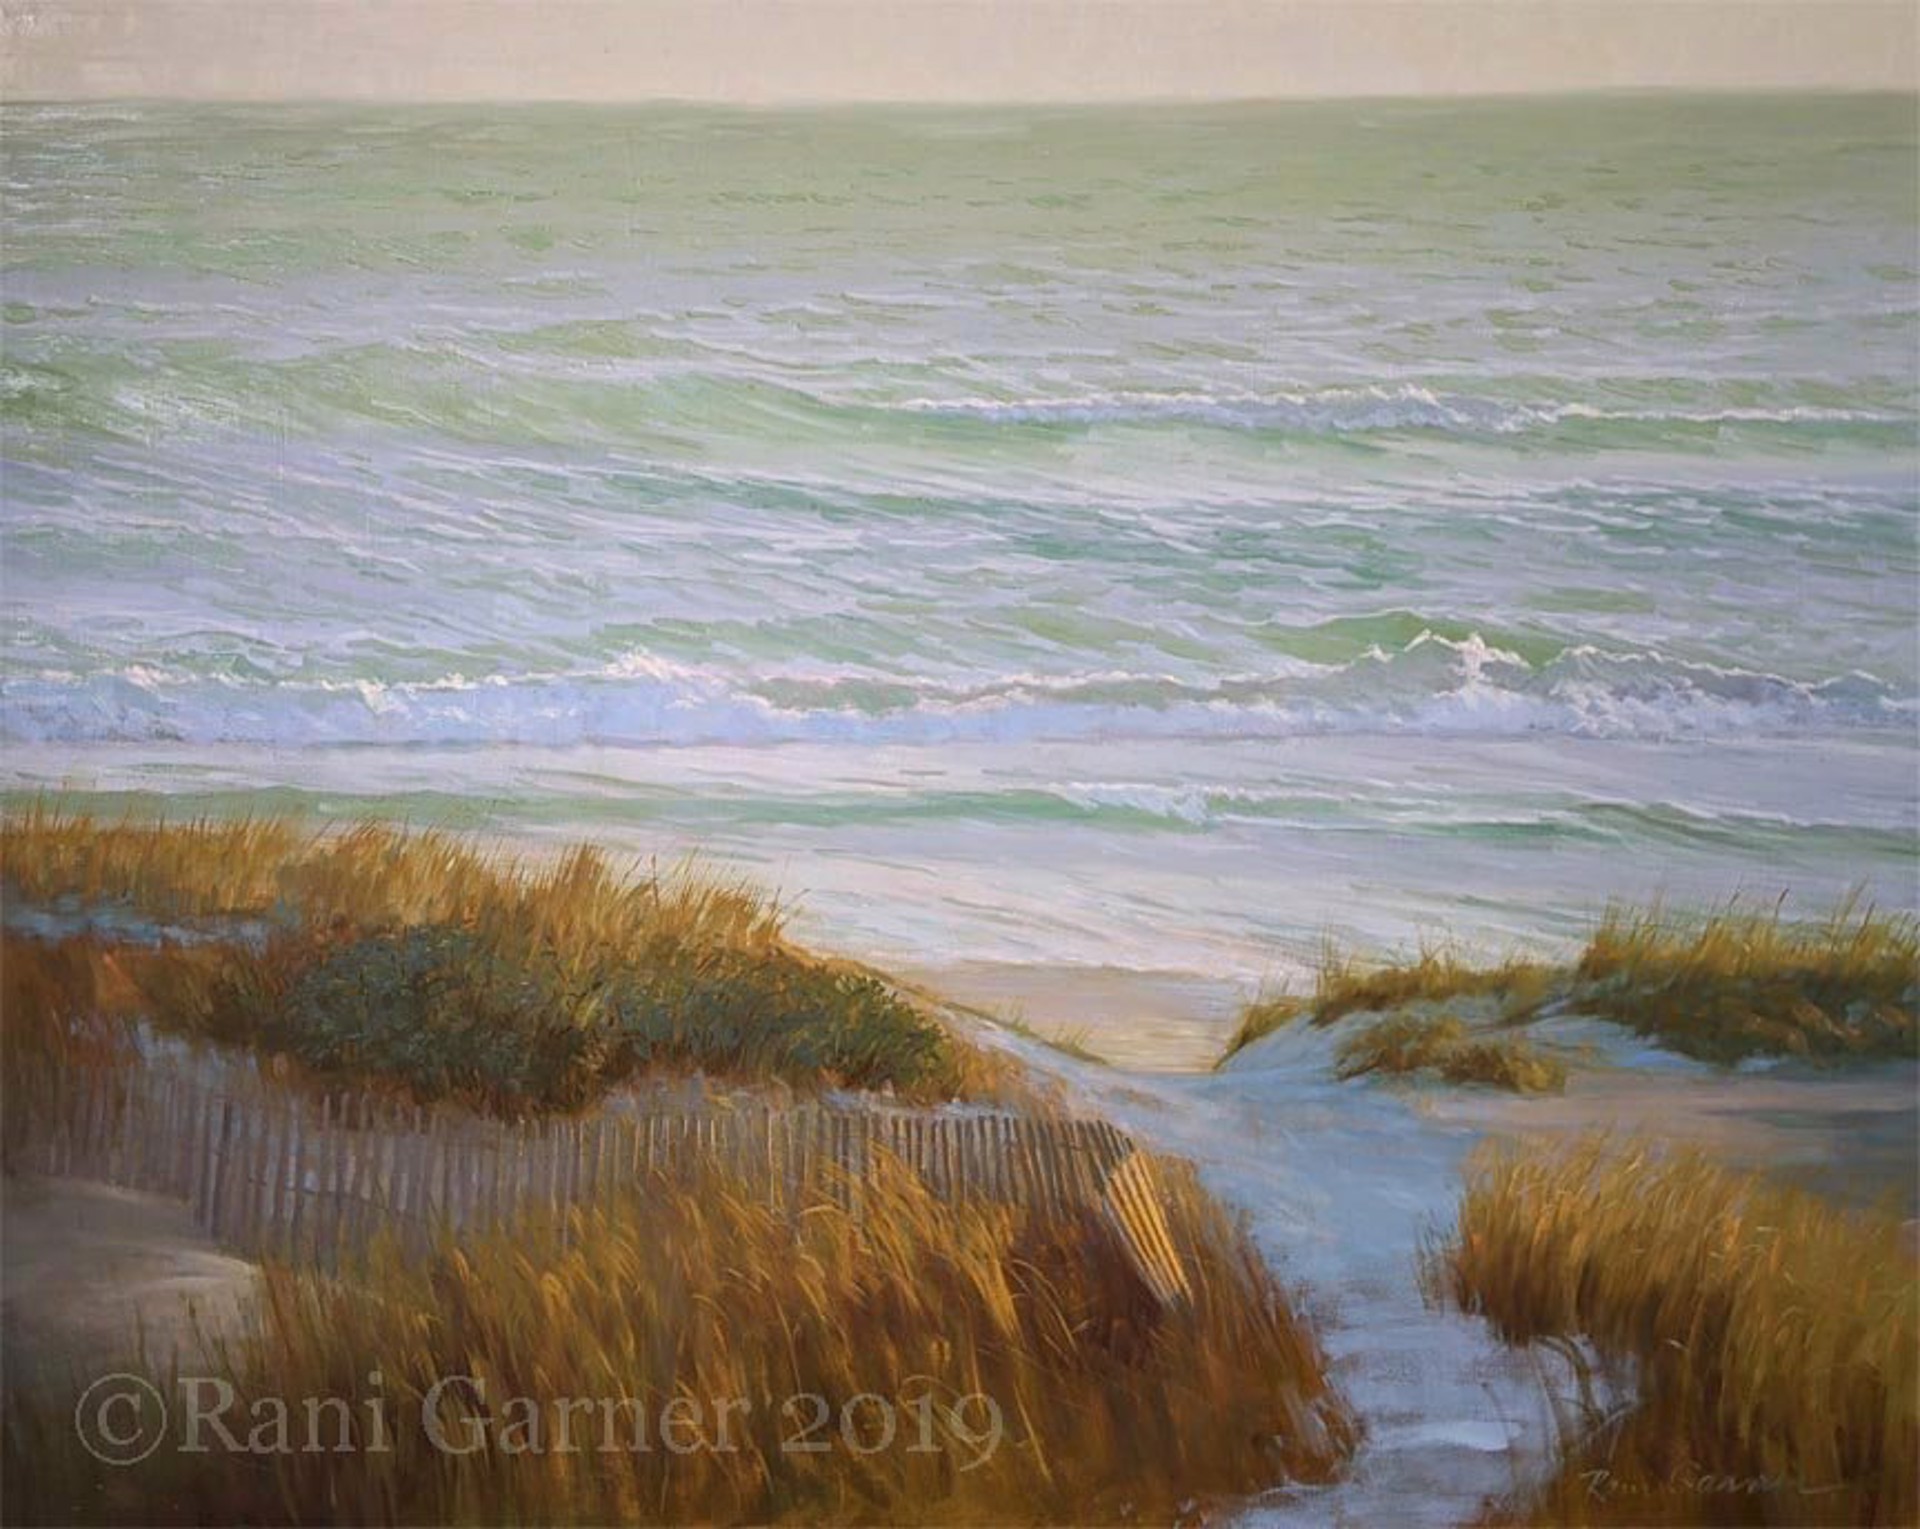 Wind On Waves by Rani Garner